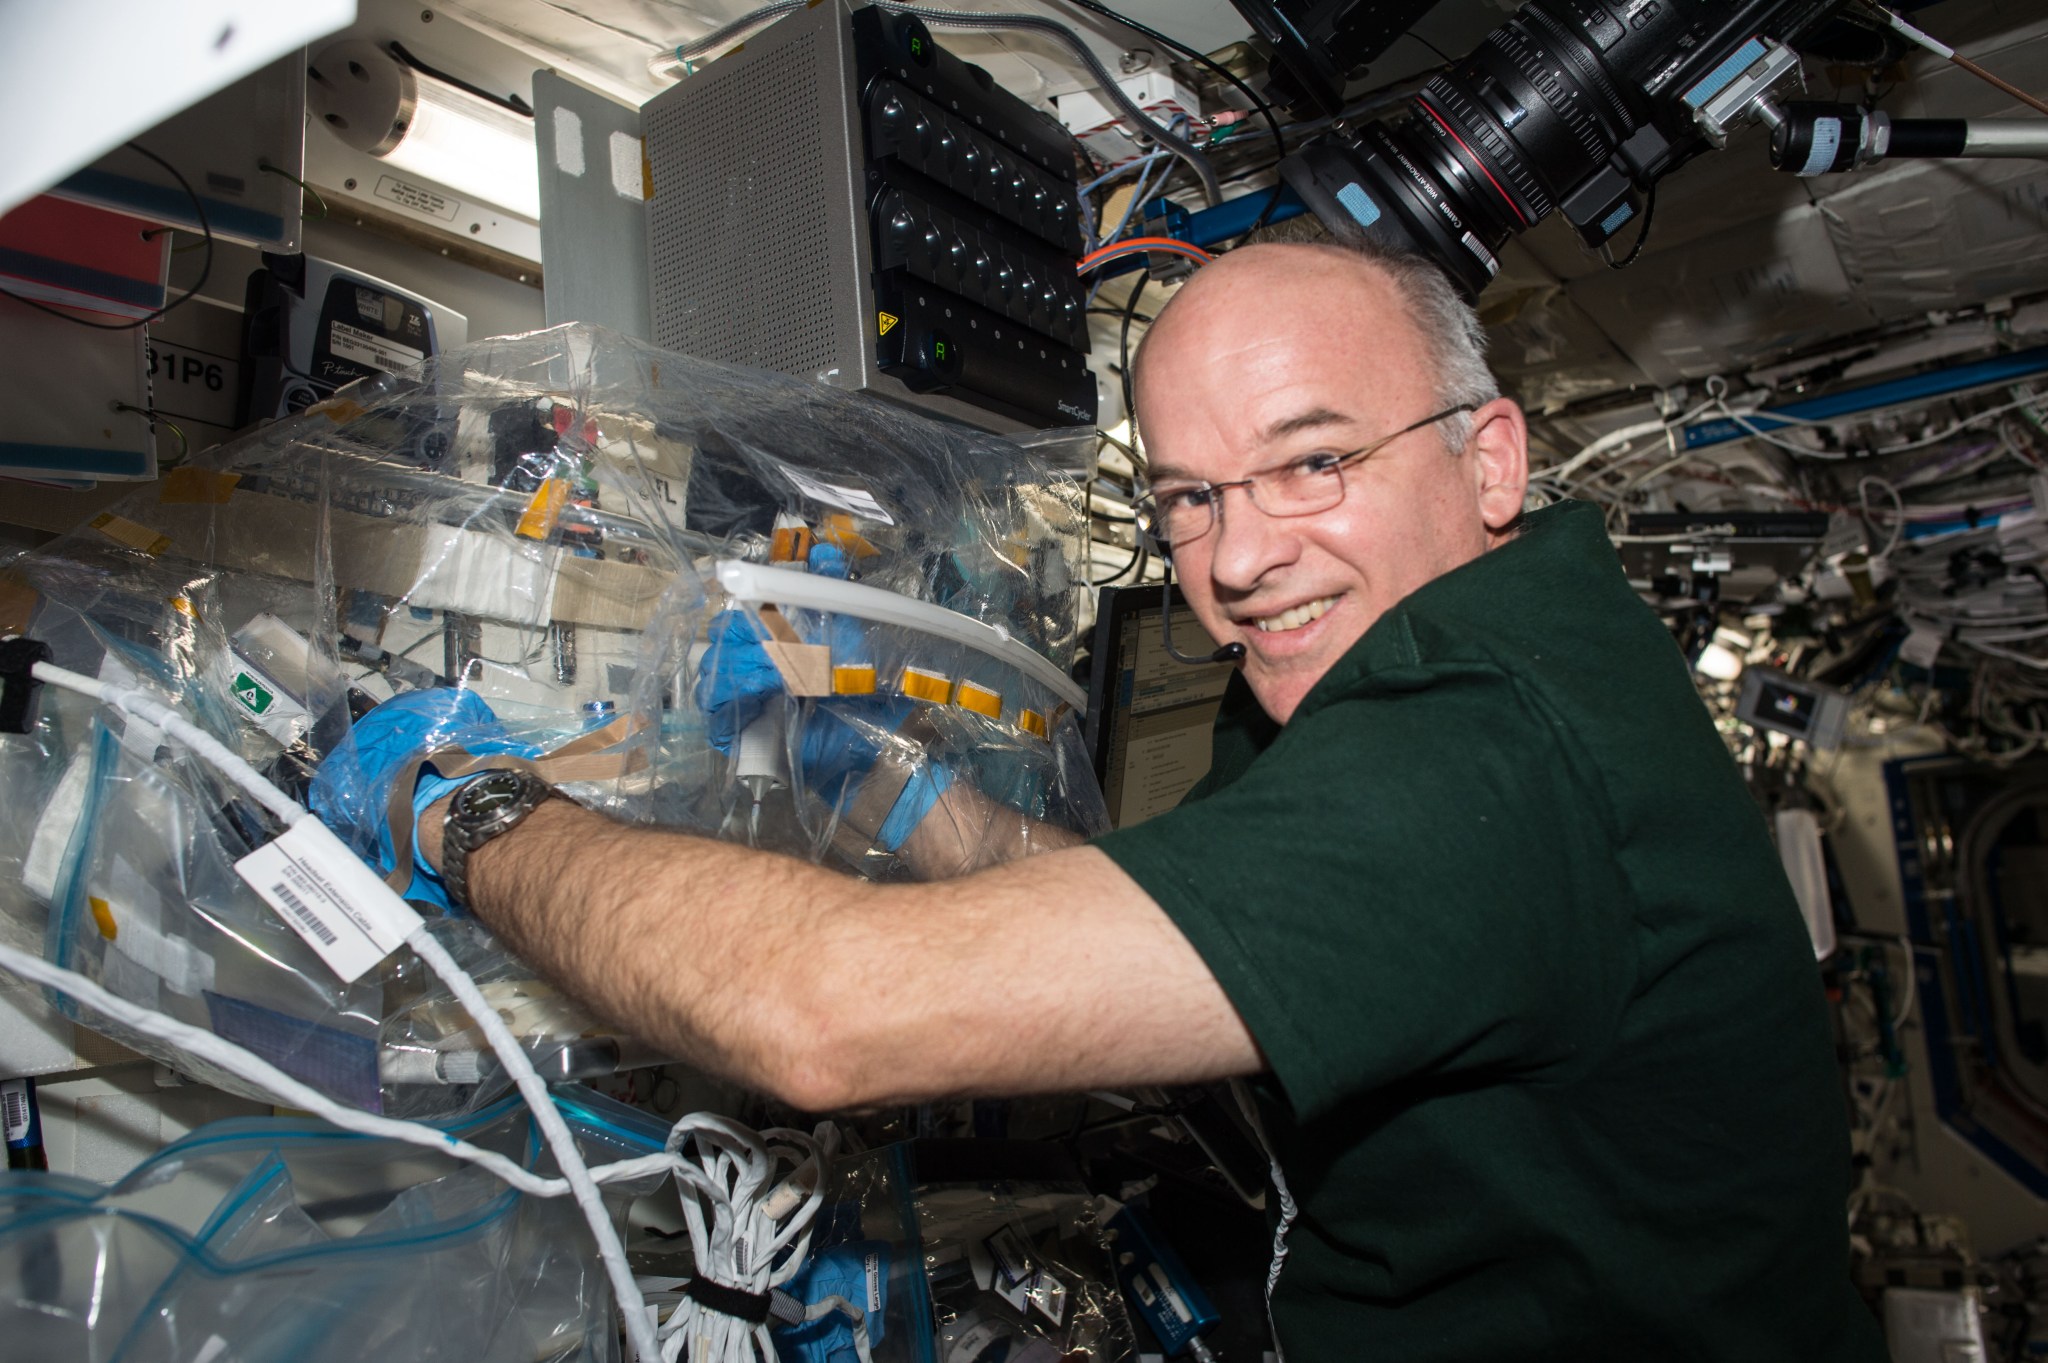 NASA astronaut and Expedition 47 Flight Engineer Jeff Williams 